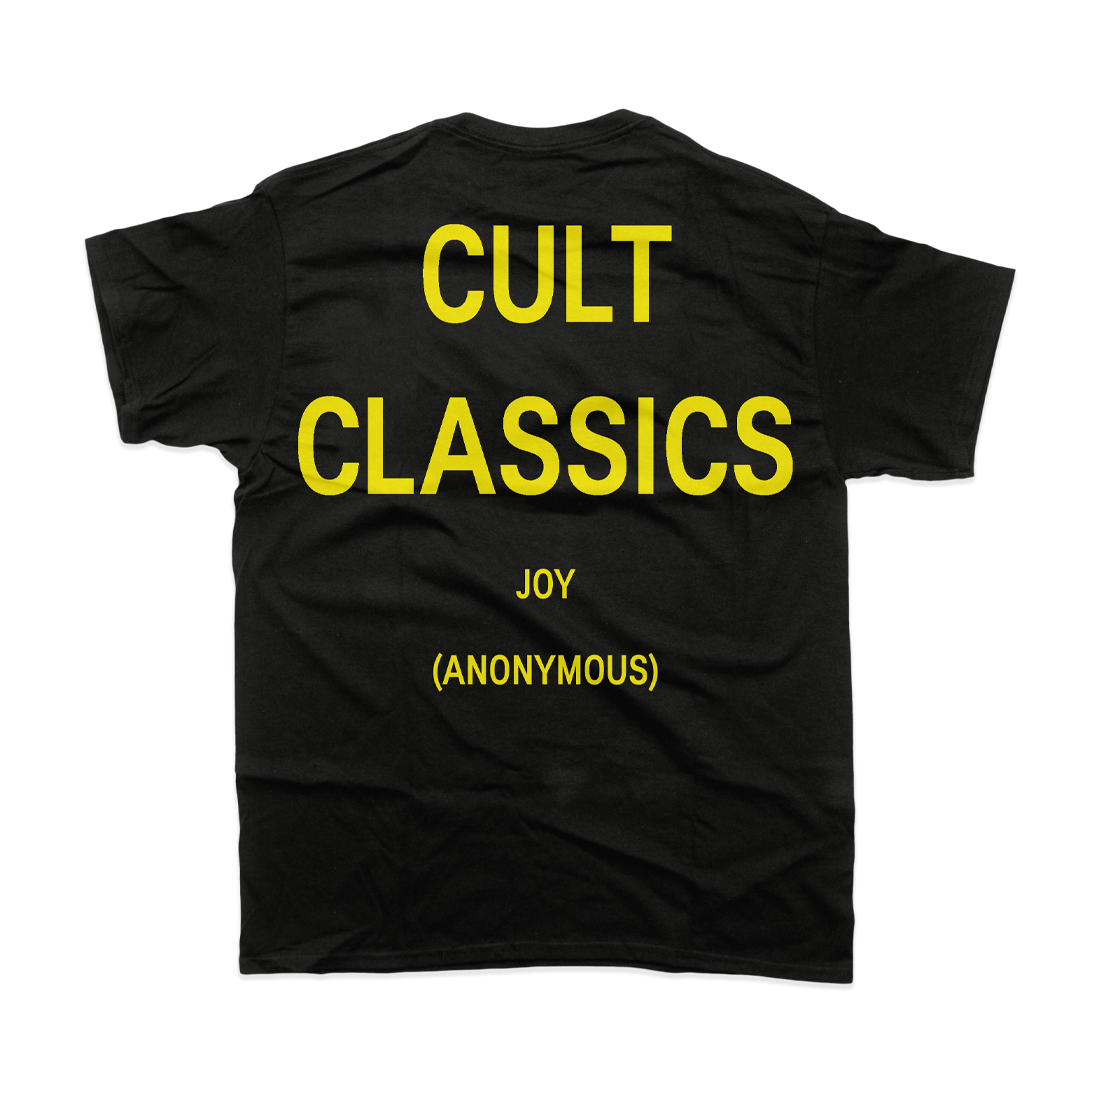 Joy Anonymous - Cult Classics Black Tee